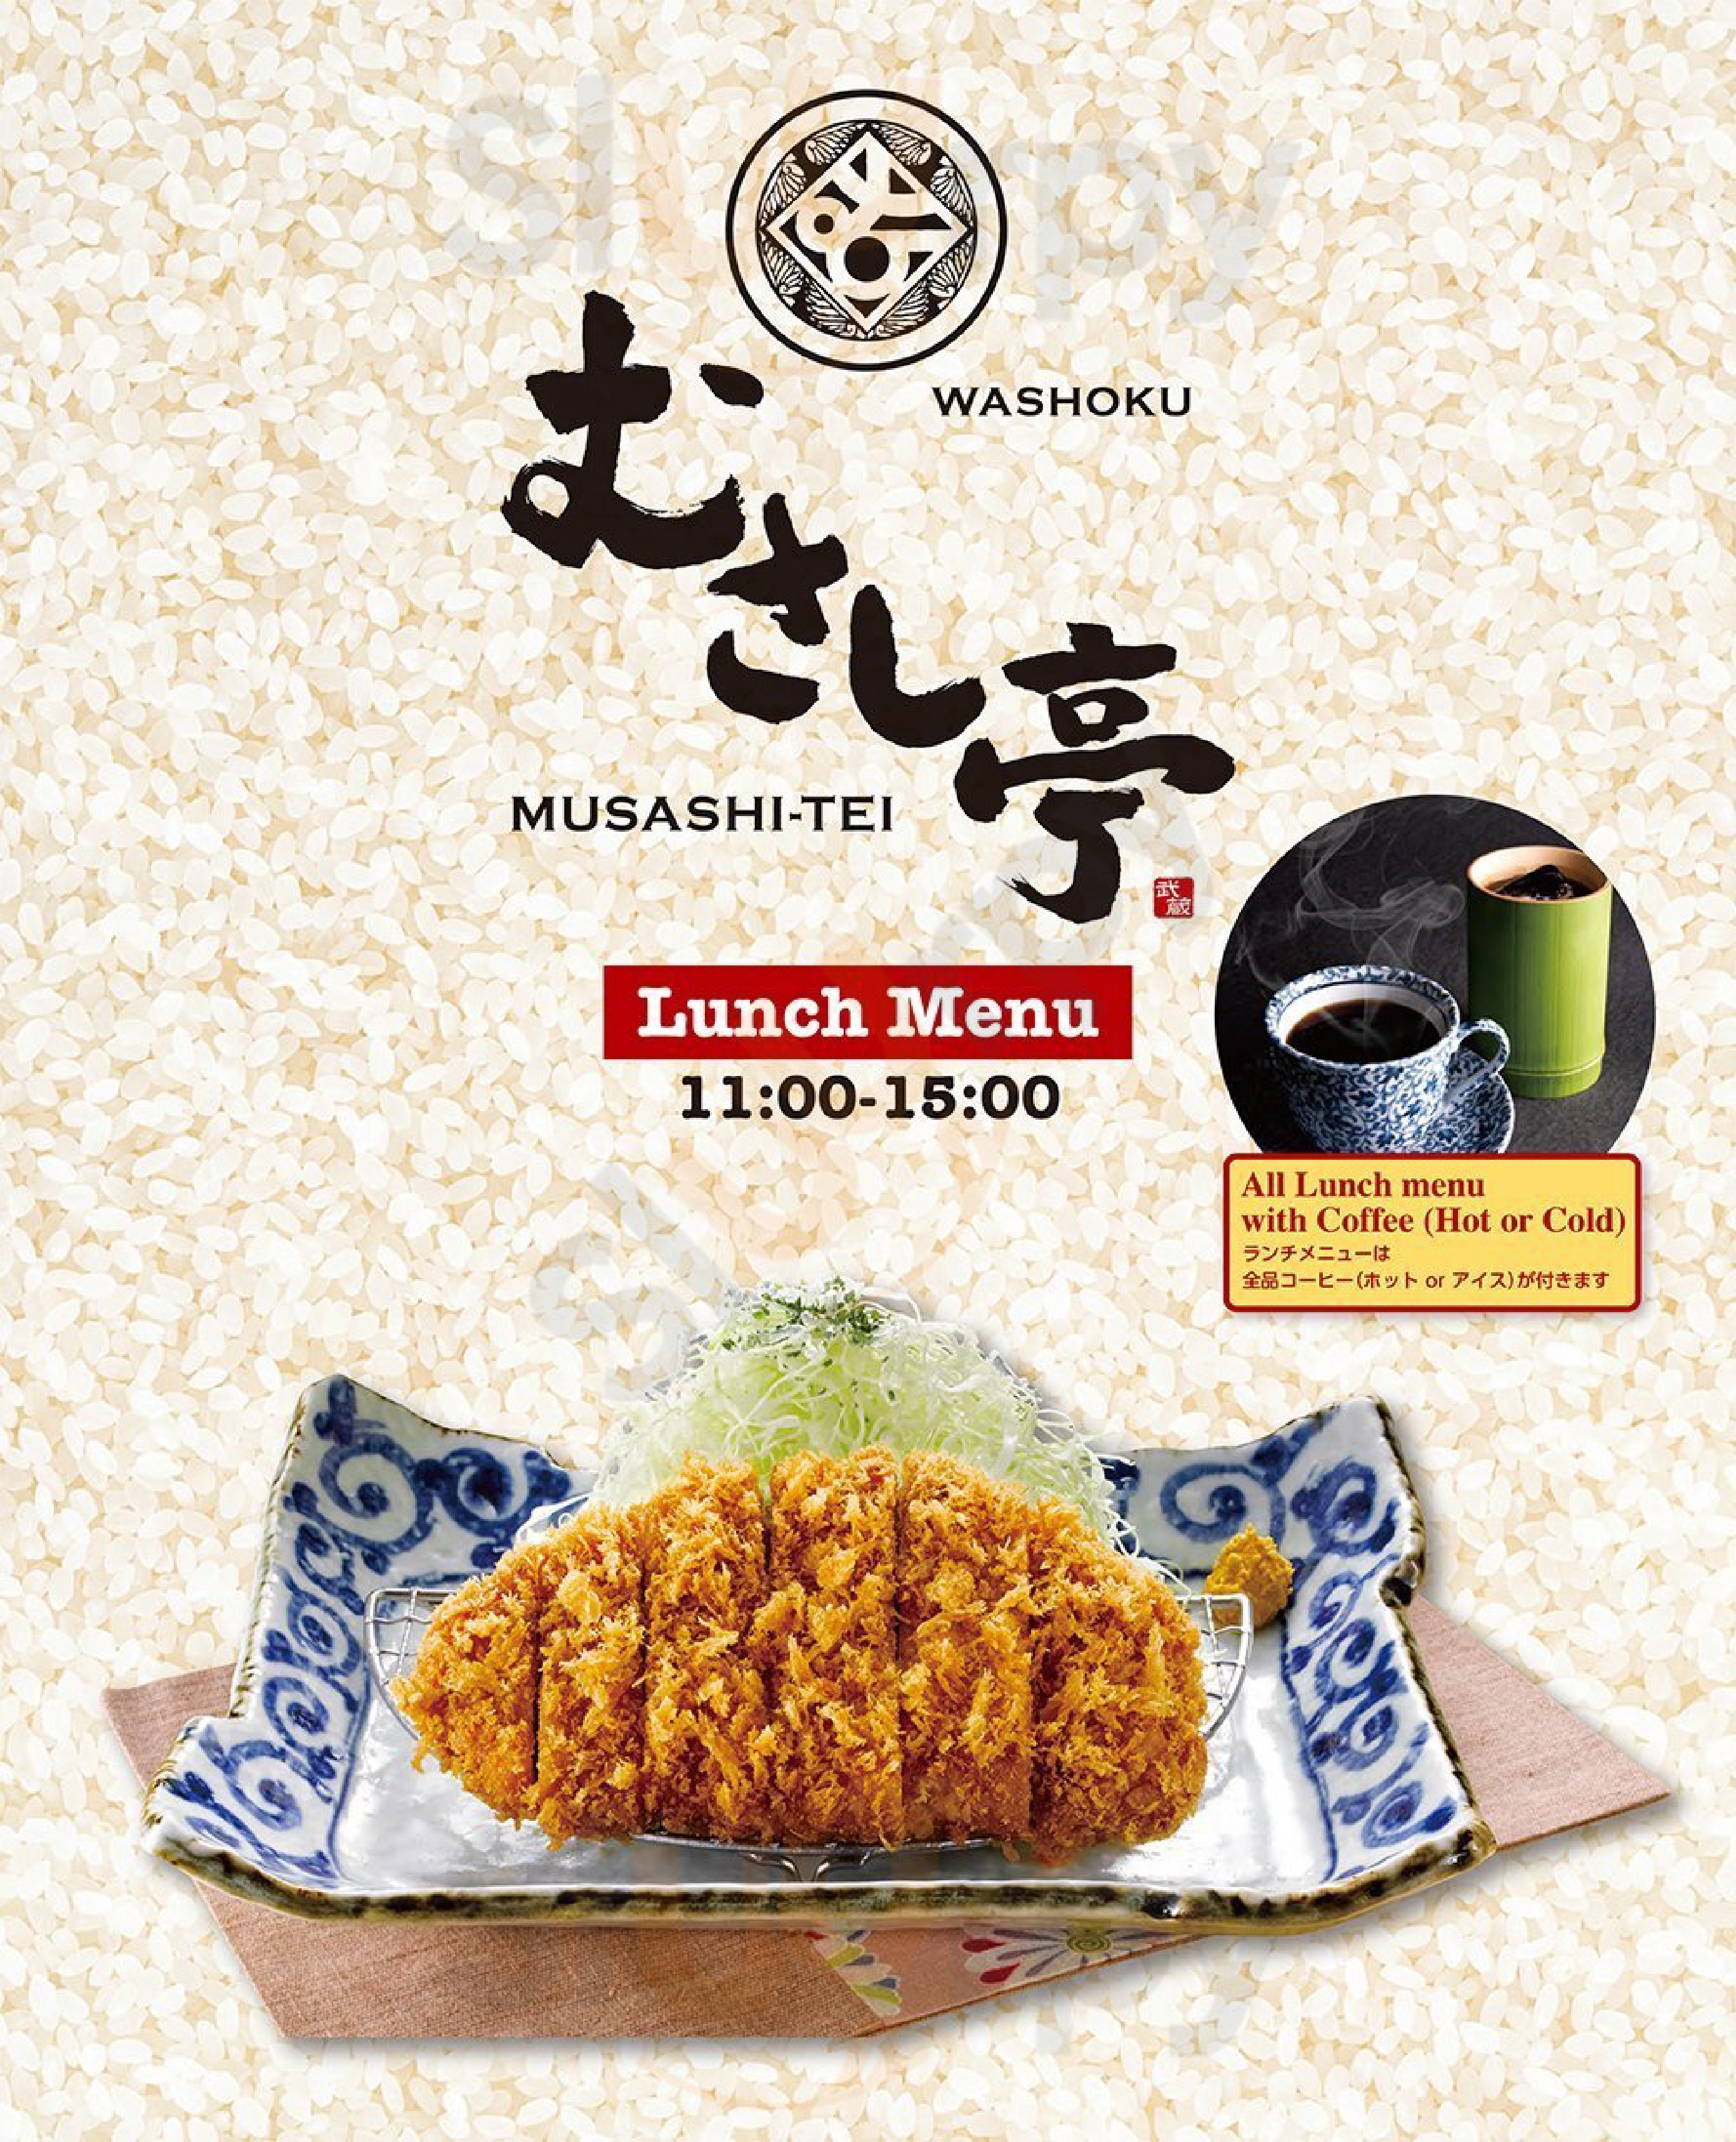 Musashi-tei Japanese Restaurant Taguig City Menu - 1